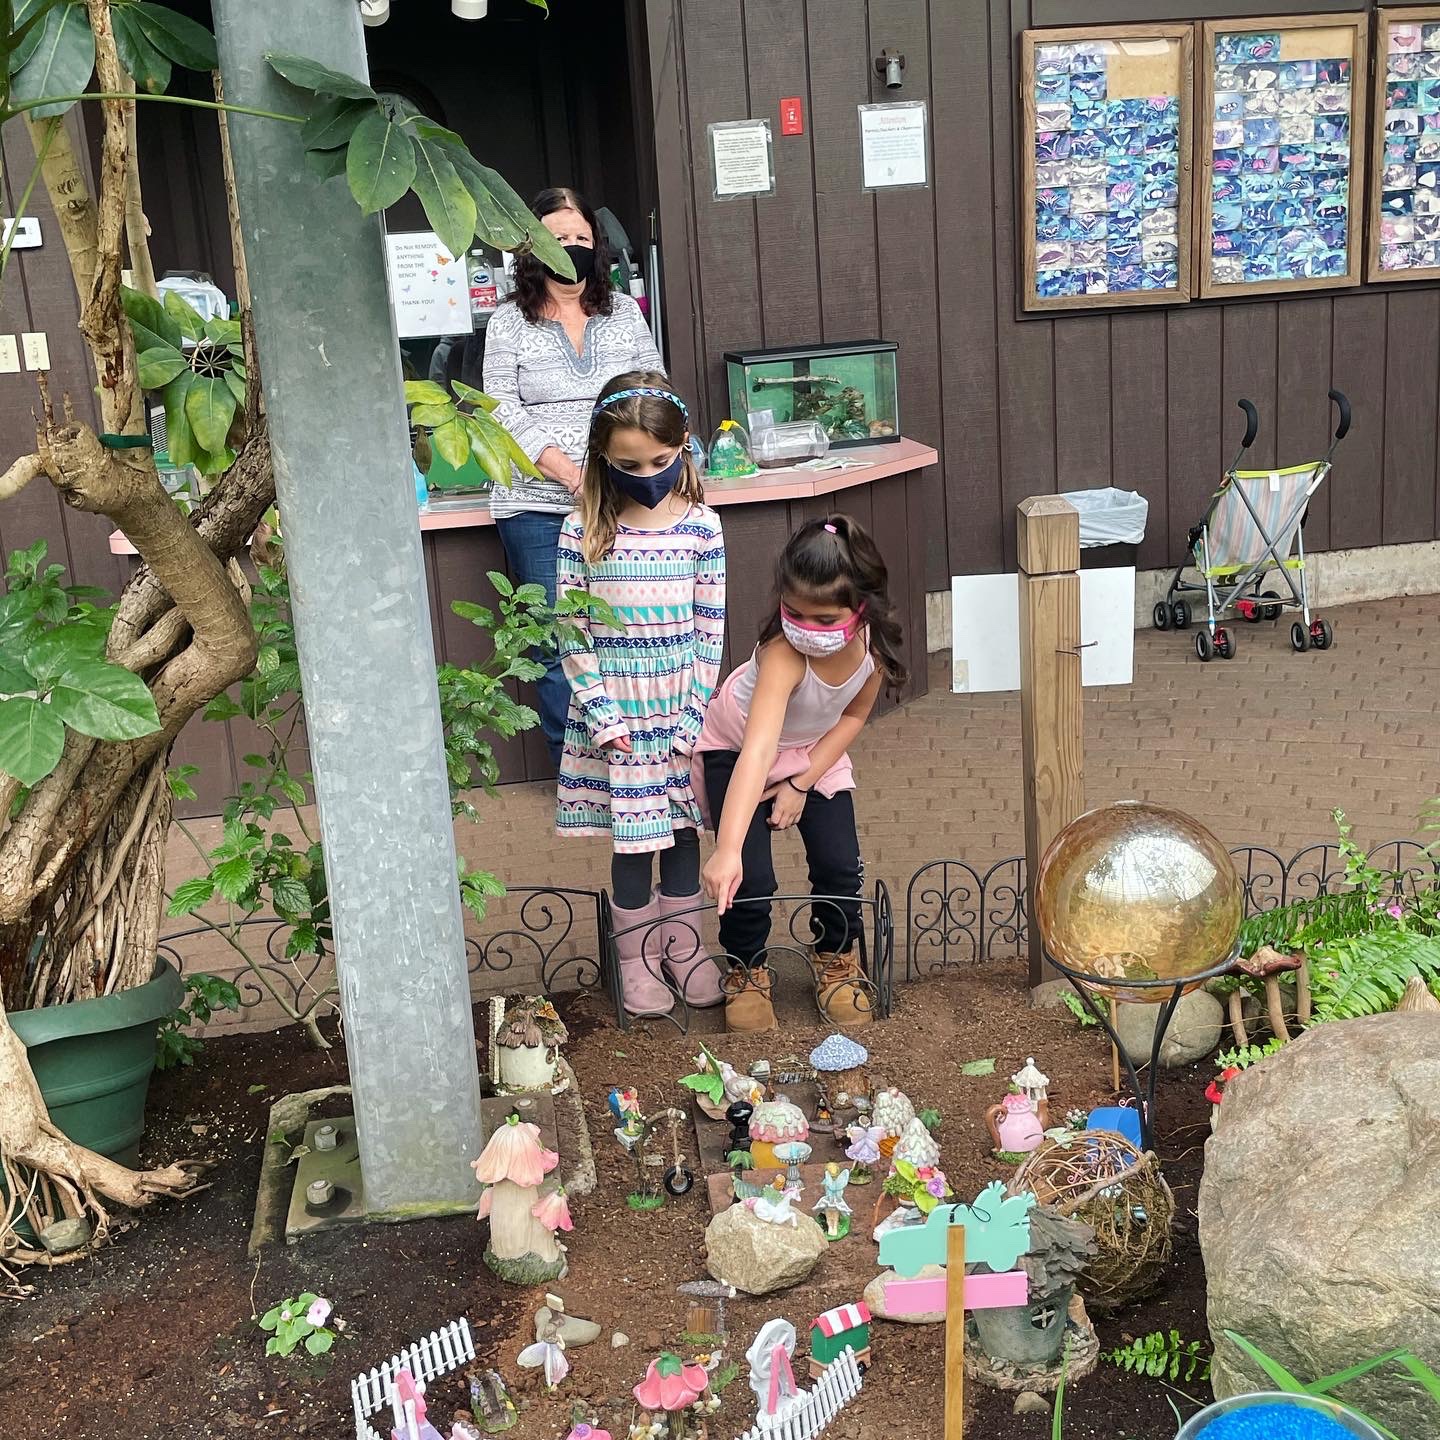 The Butterfly Place in Westford, Massachusetts Tyngsboro, Massachusetts with kids